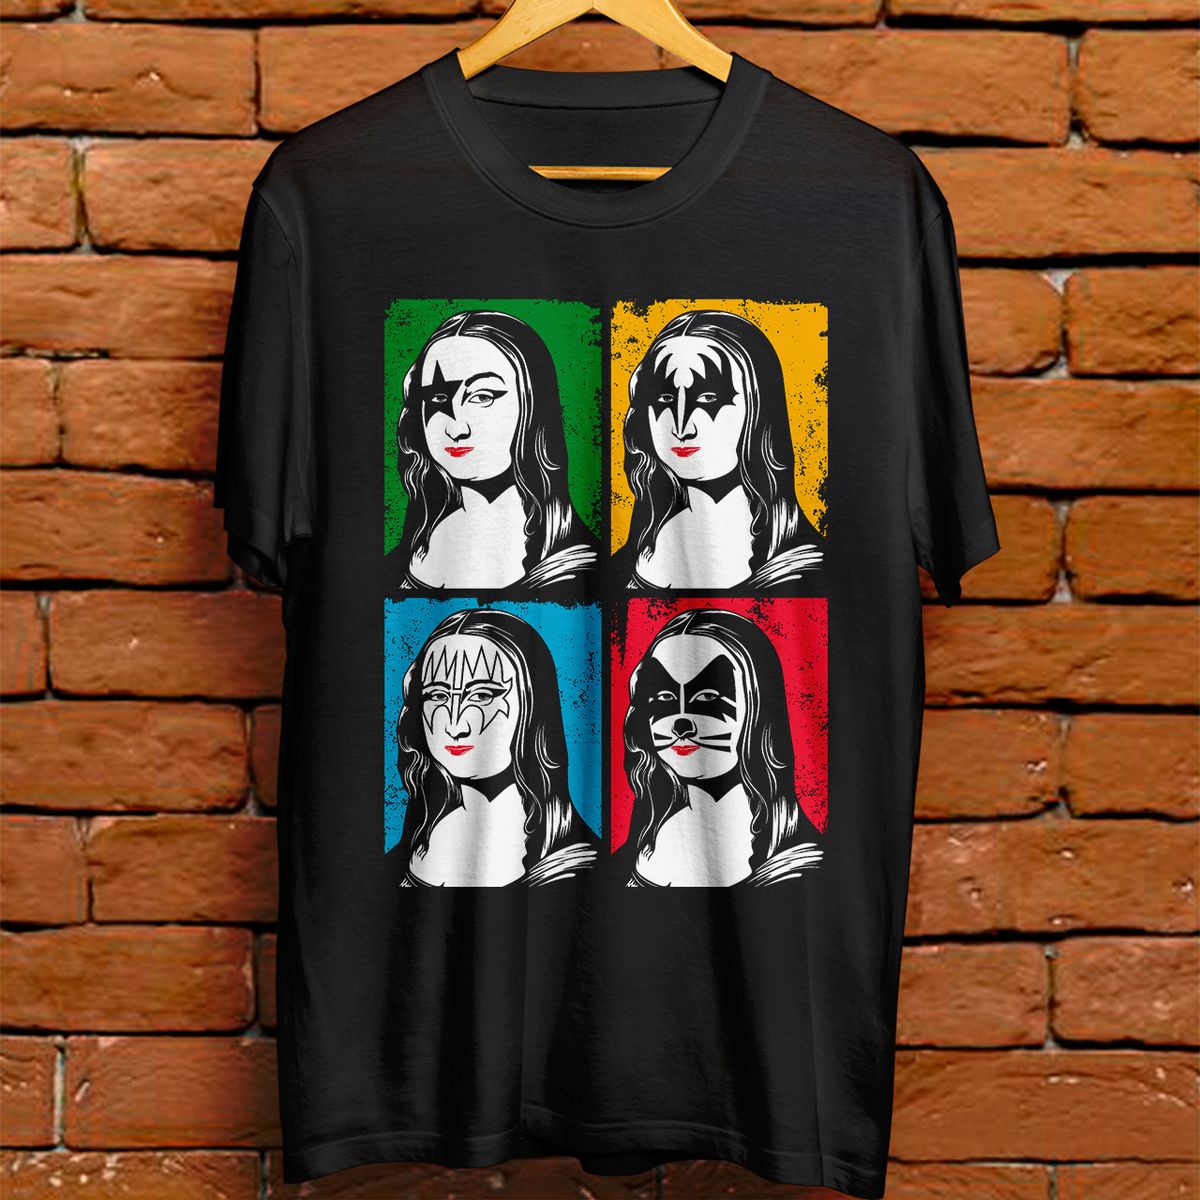 Nome do produto: Camiseta Unissex - Mona lisa rockstar